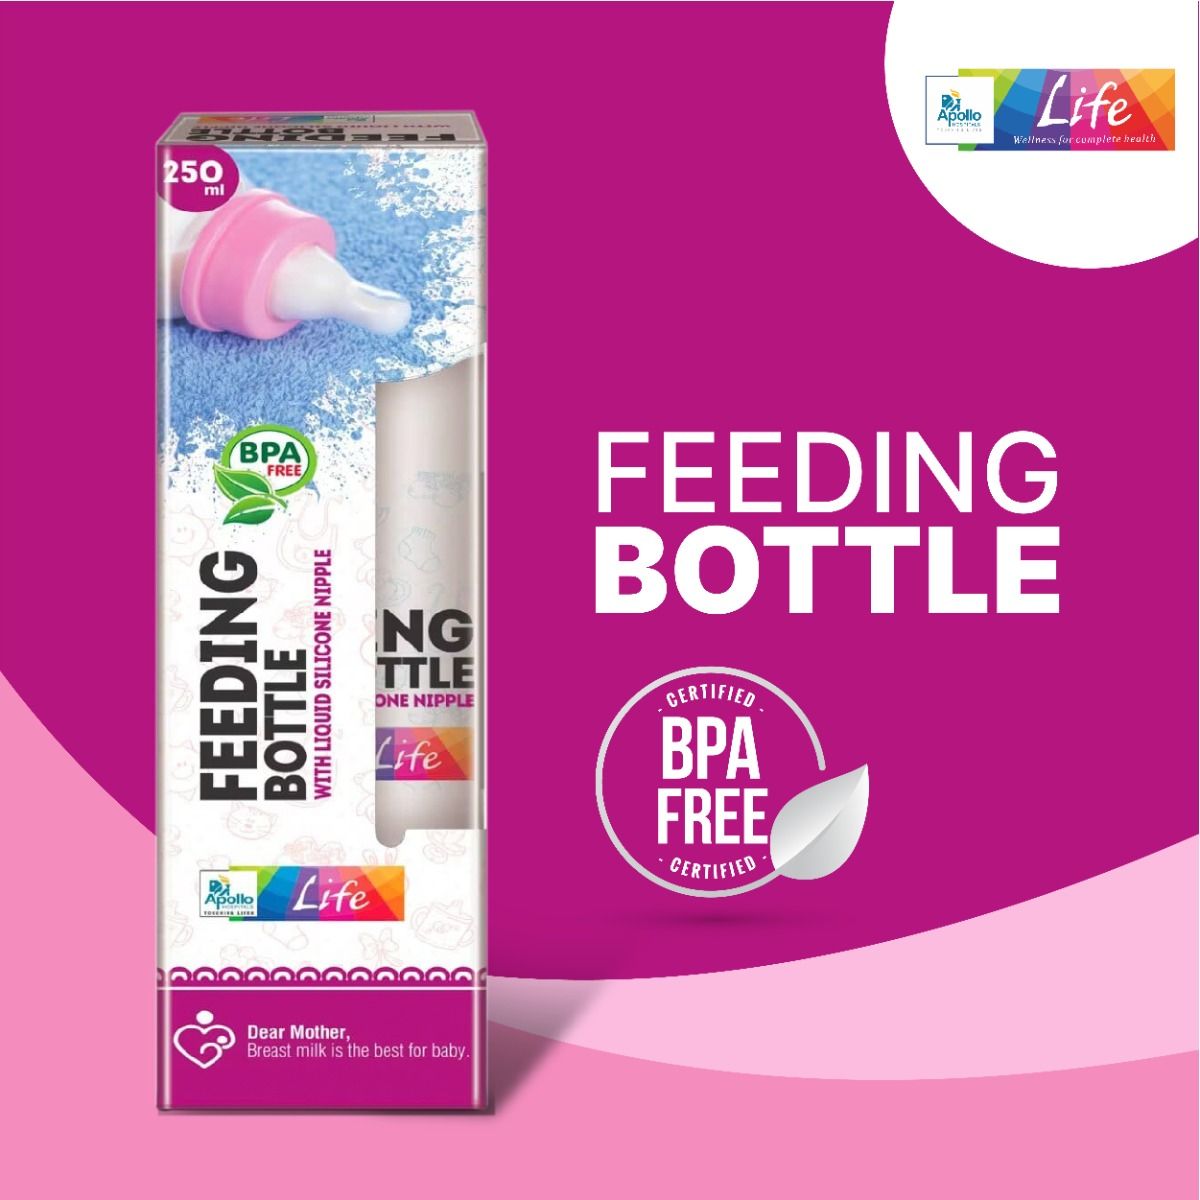 Apollo Life Feeding Bottle, 250 ml, Pack of 1 